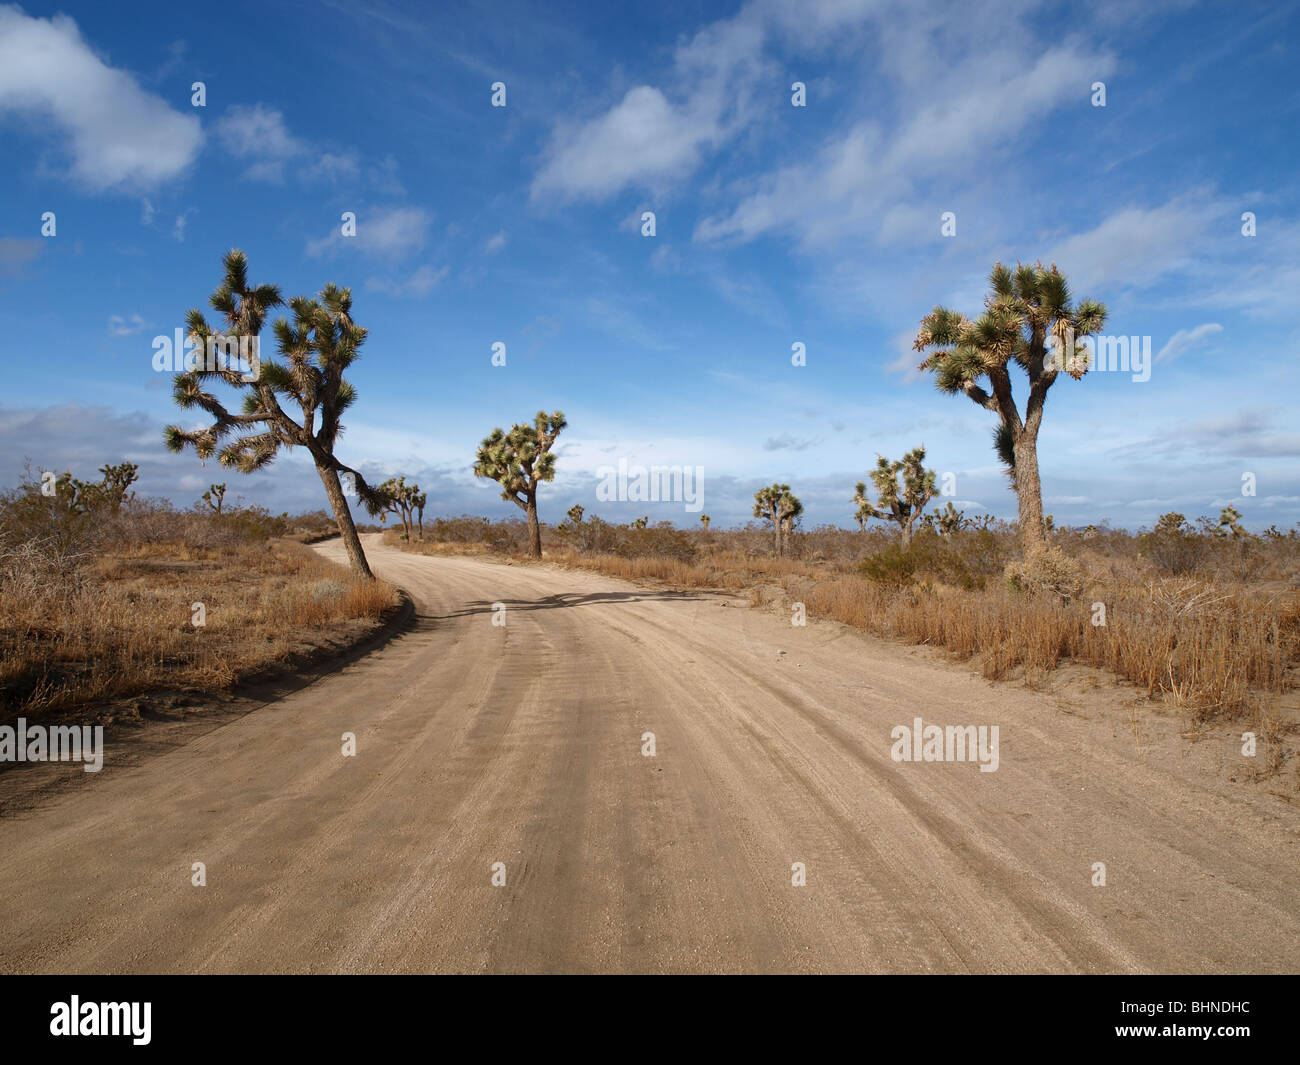 Joshua Trees frame a dirt road in California's Mojave Desert. Stock Photo